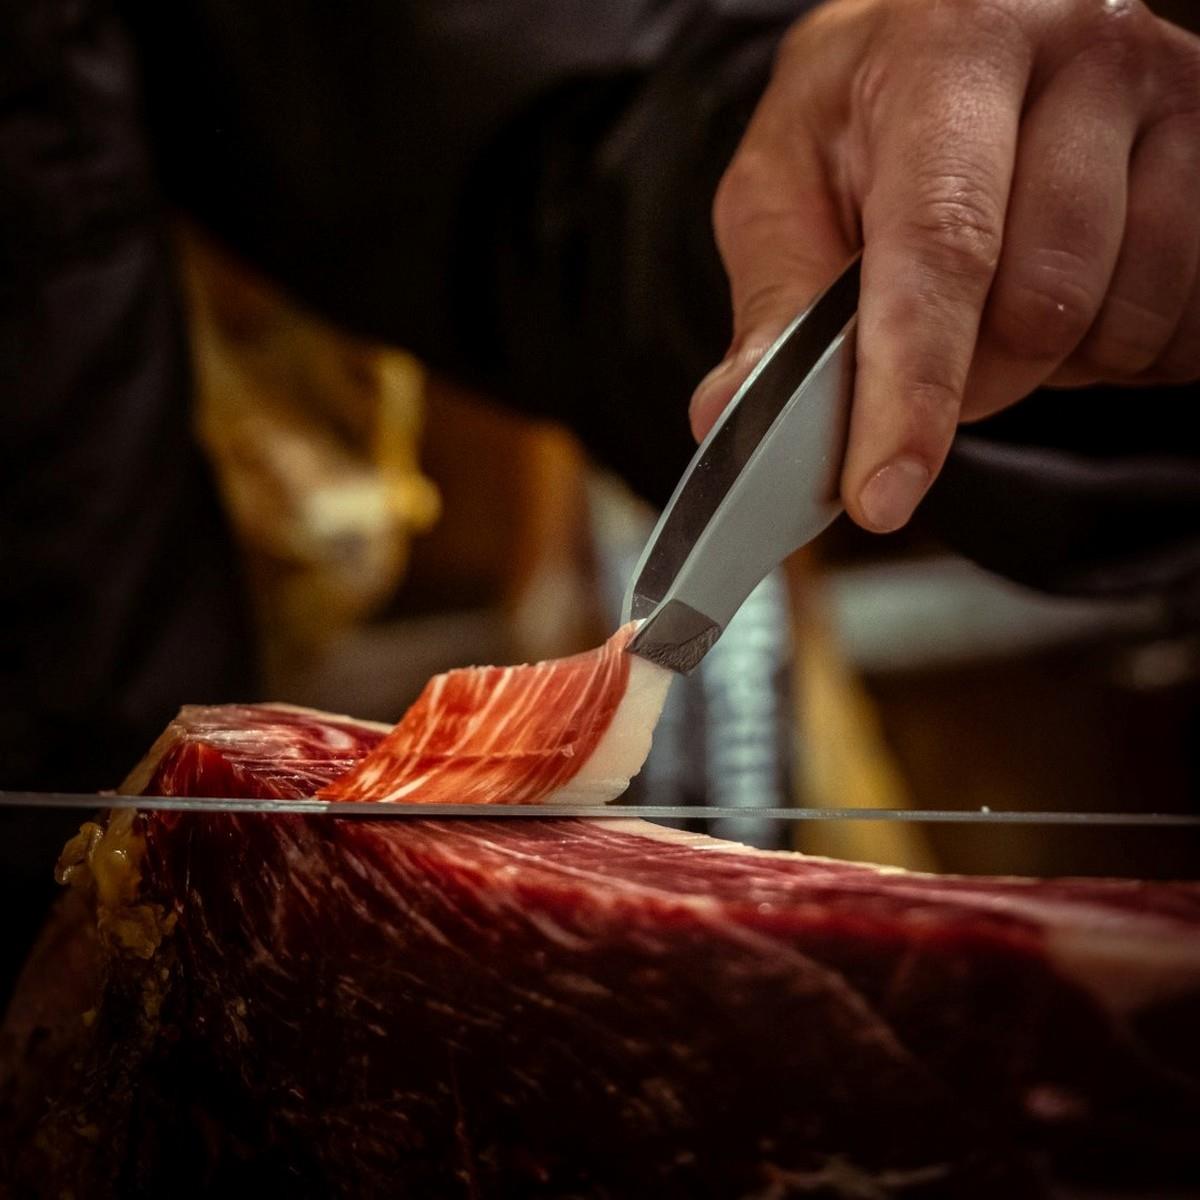 Bellota Ham 100% Iberian Pata Negra cut with knife